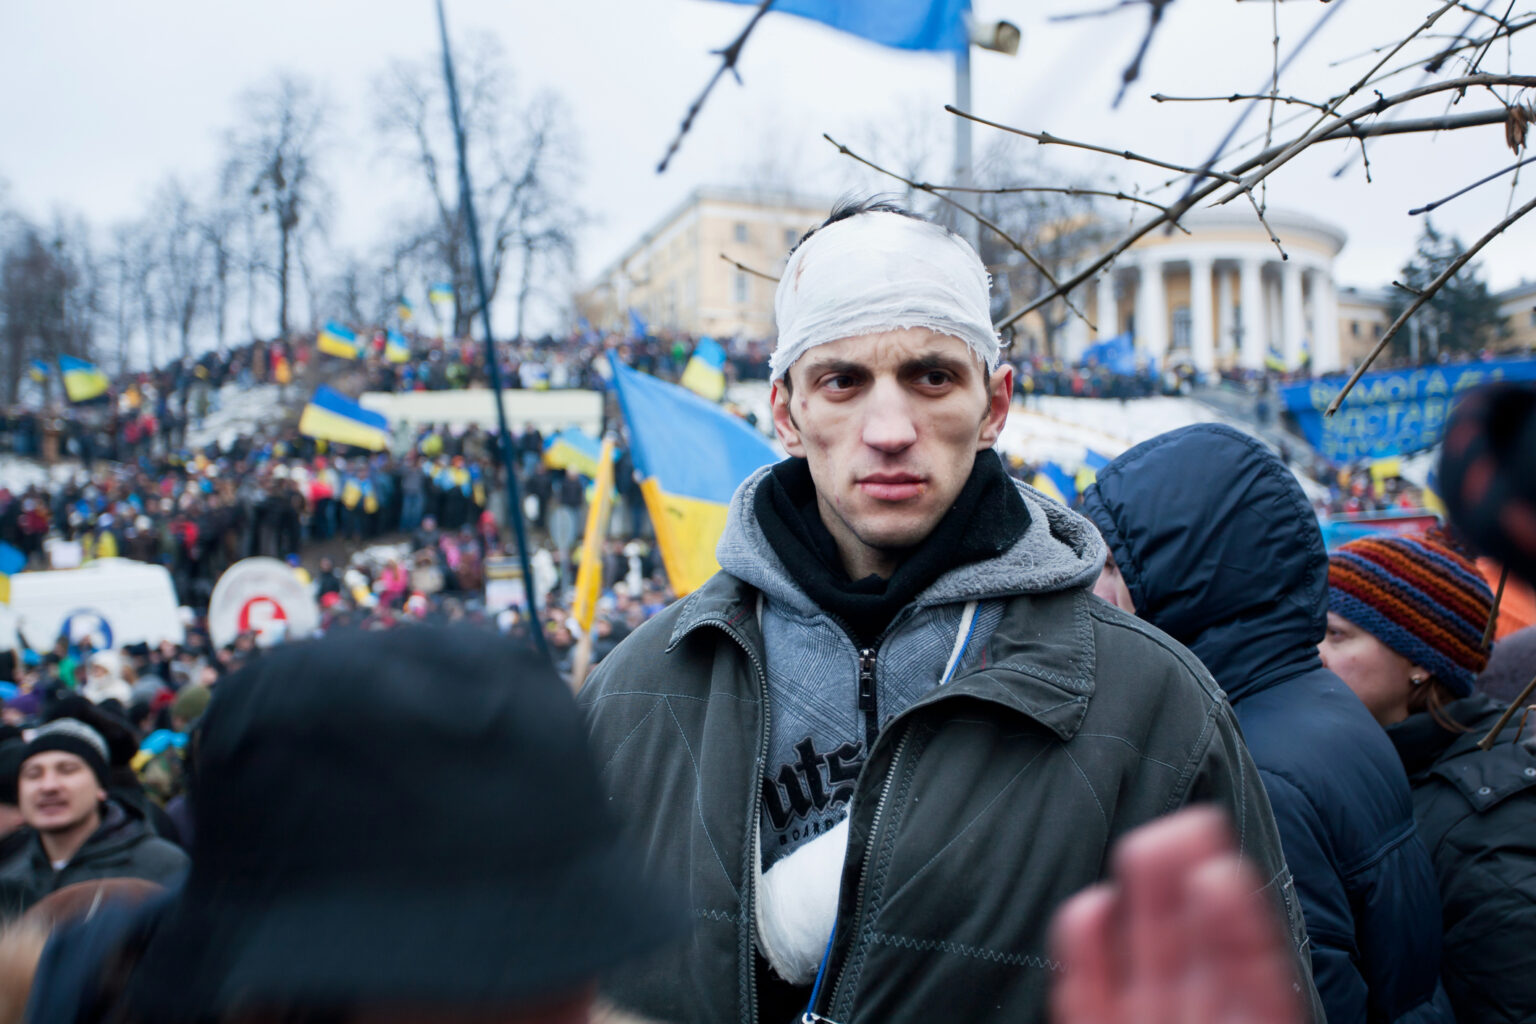 oameni-raniti-Ucraina-1536x1024.jpg